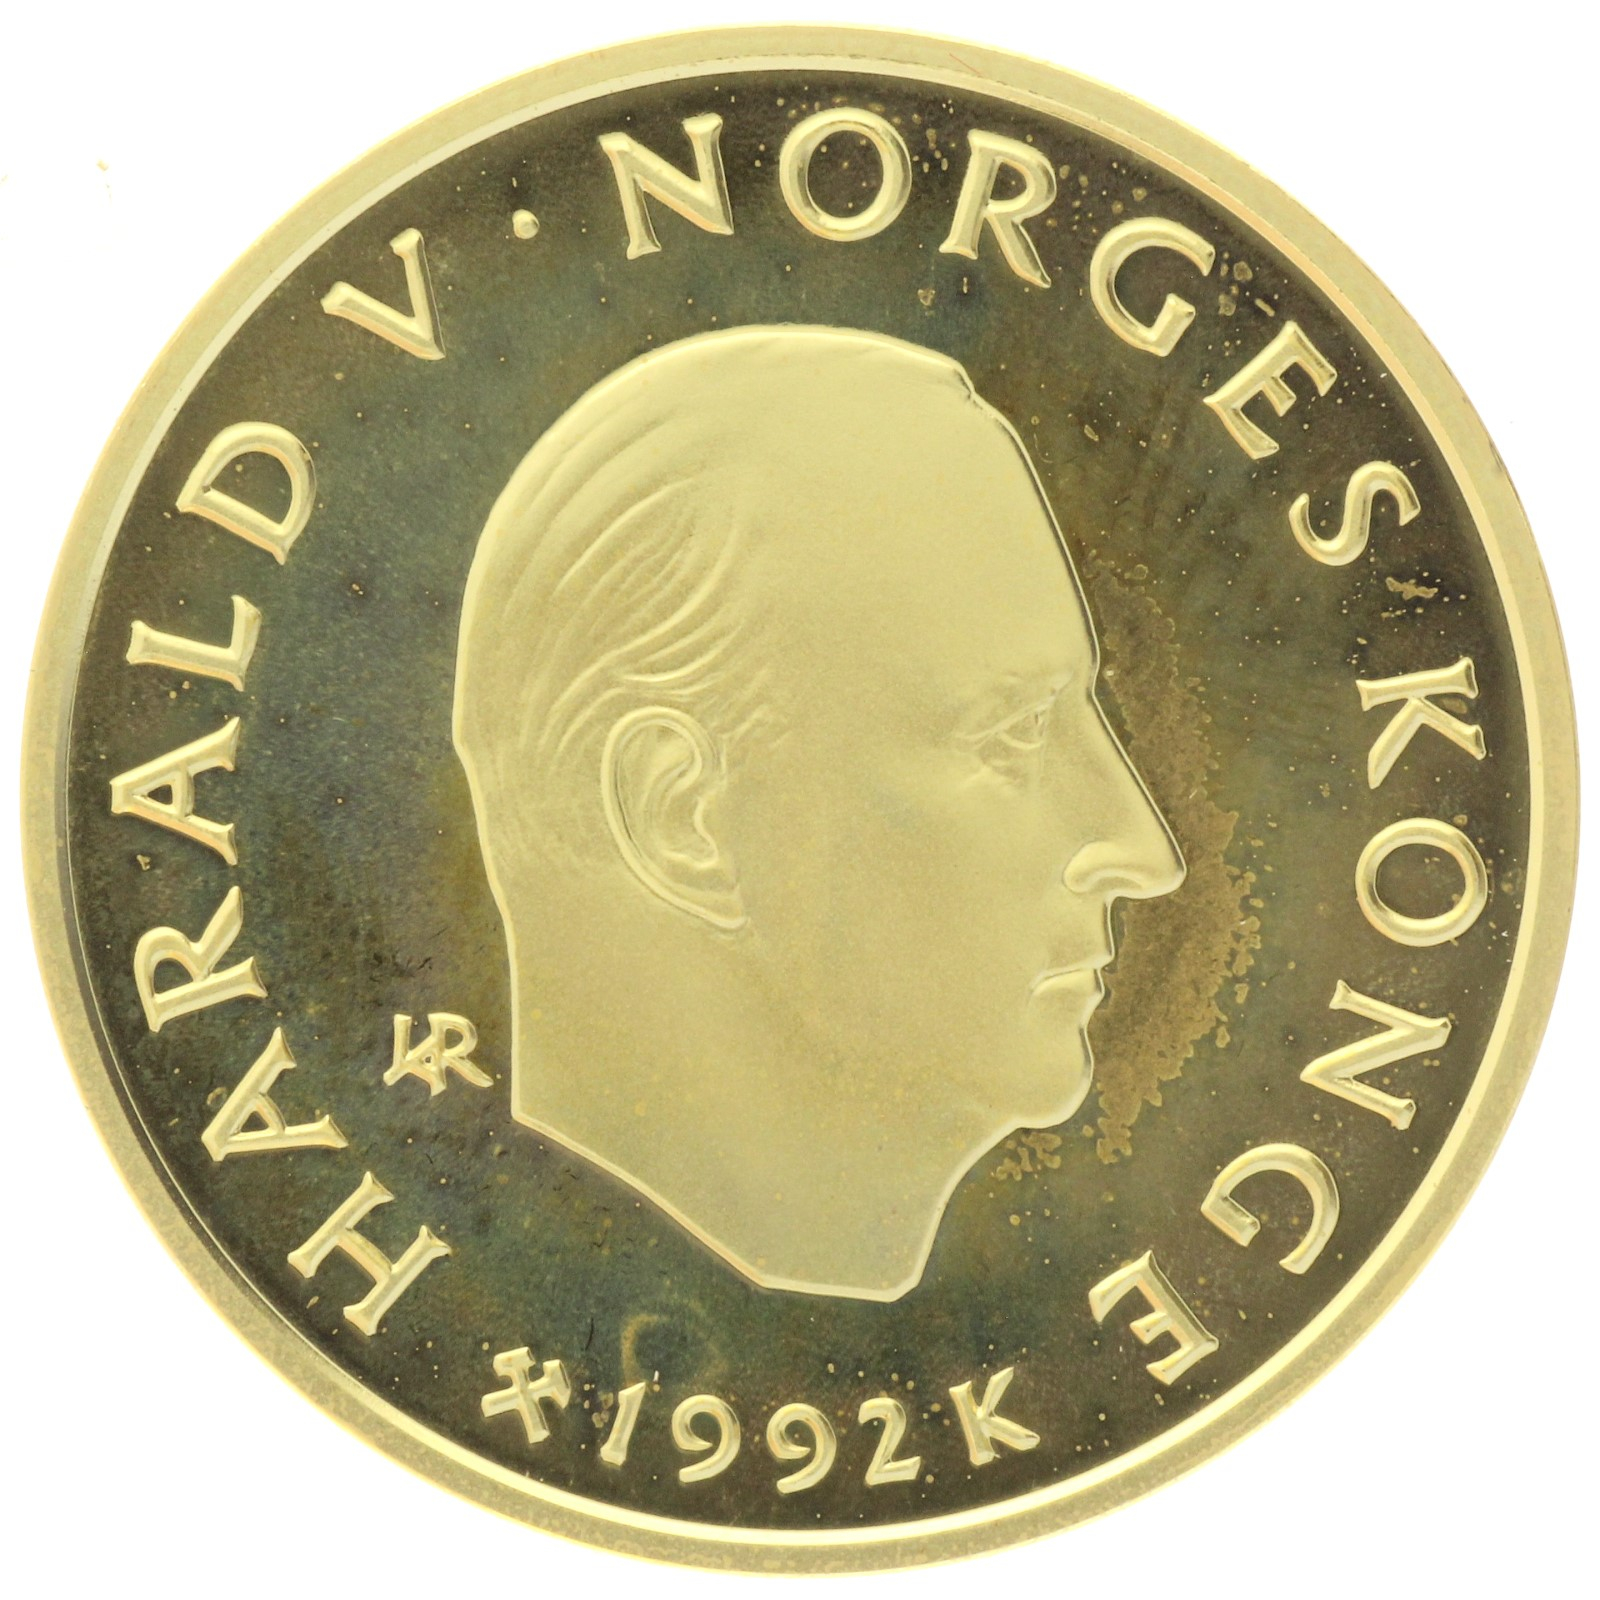 Norway - 1500 Kroner - 1992 - Harald V - 1994 Olympics - 1/2oz